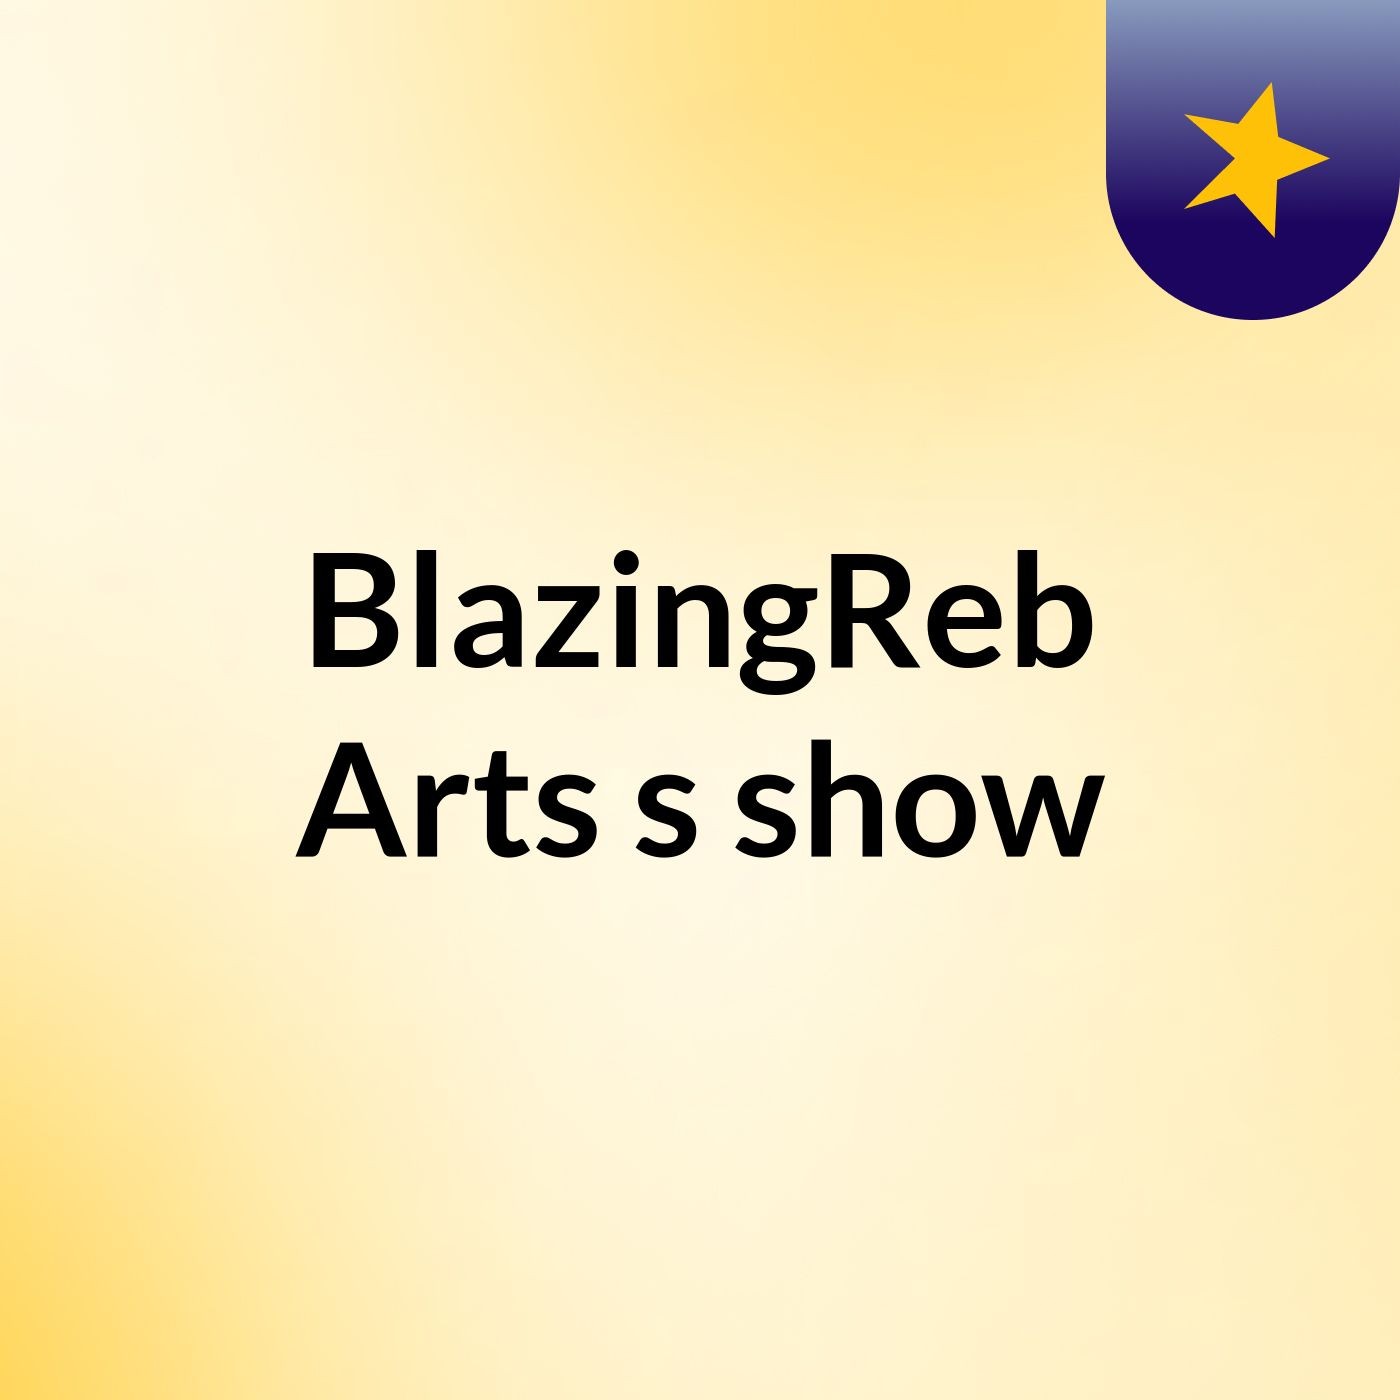 BlazingReb Arts's show